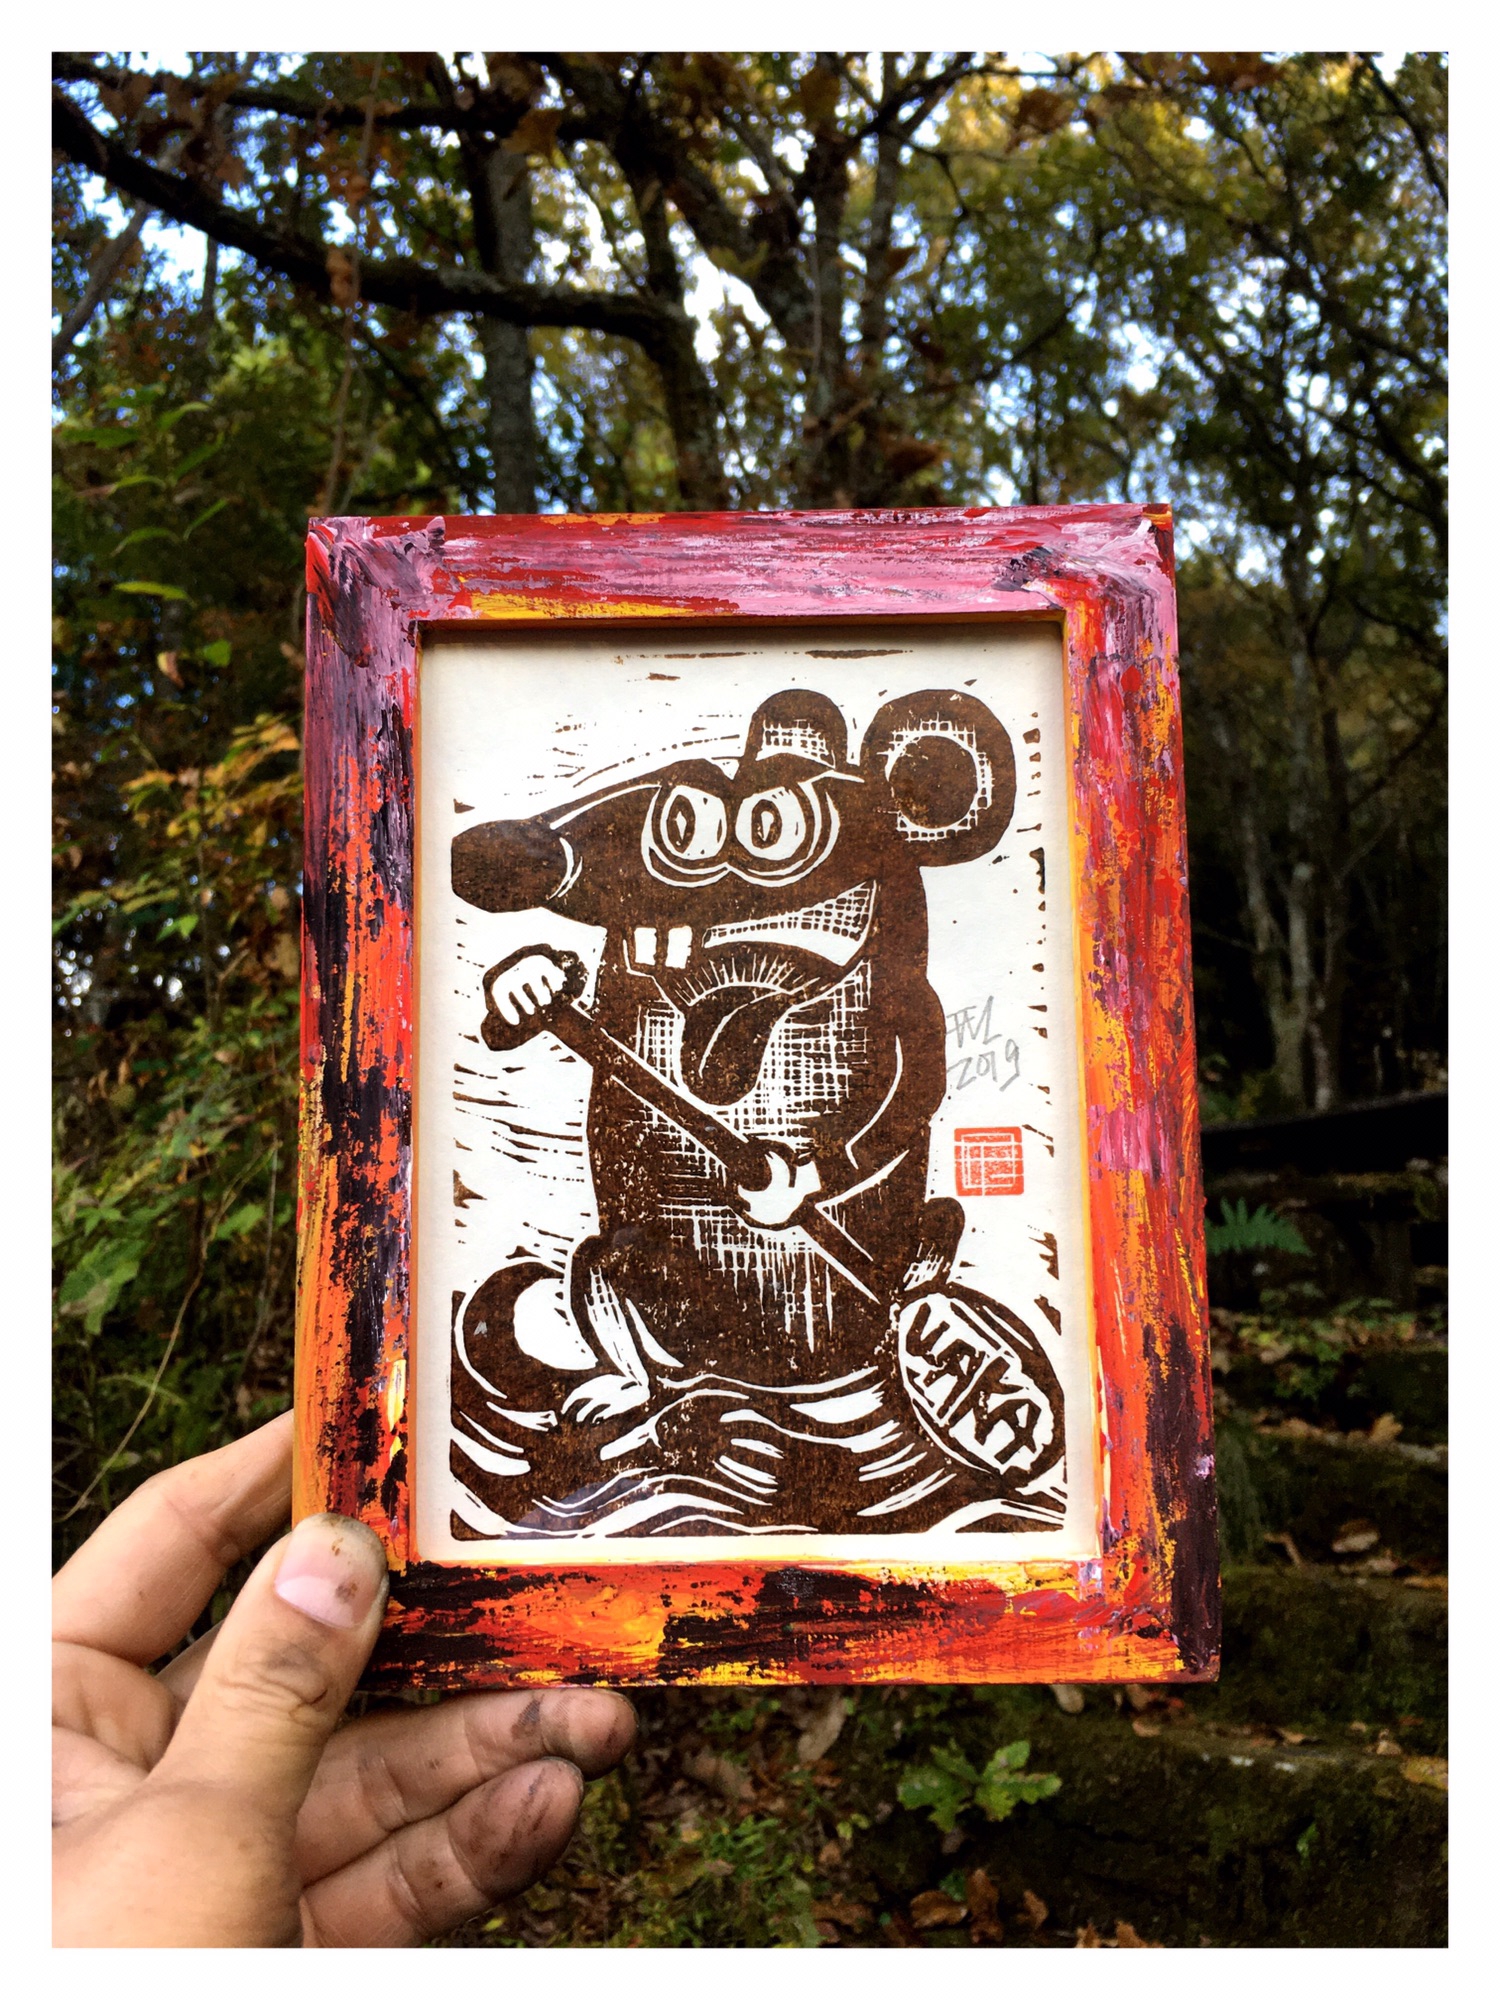 令和 【Waka Rat】①木版画販売🐭 | Kei Yoshimura